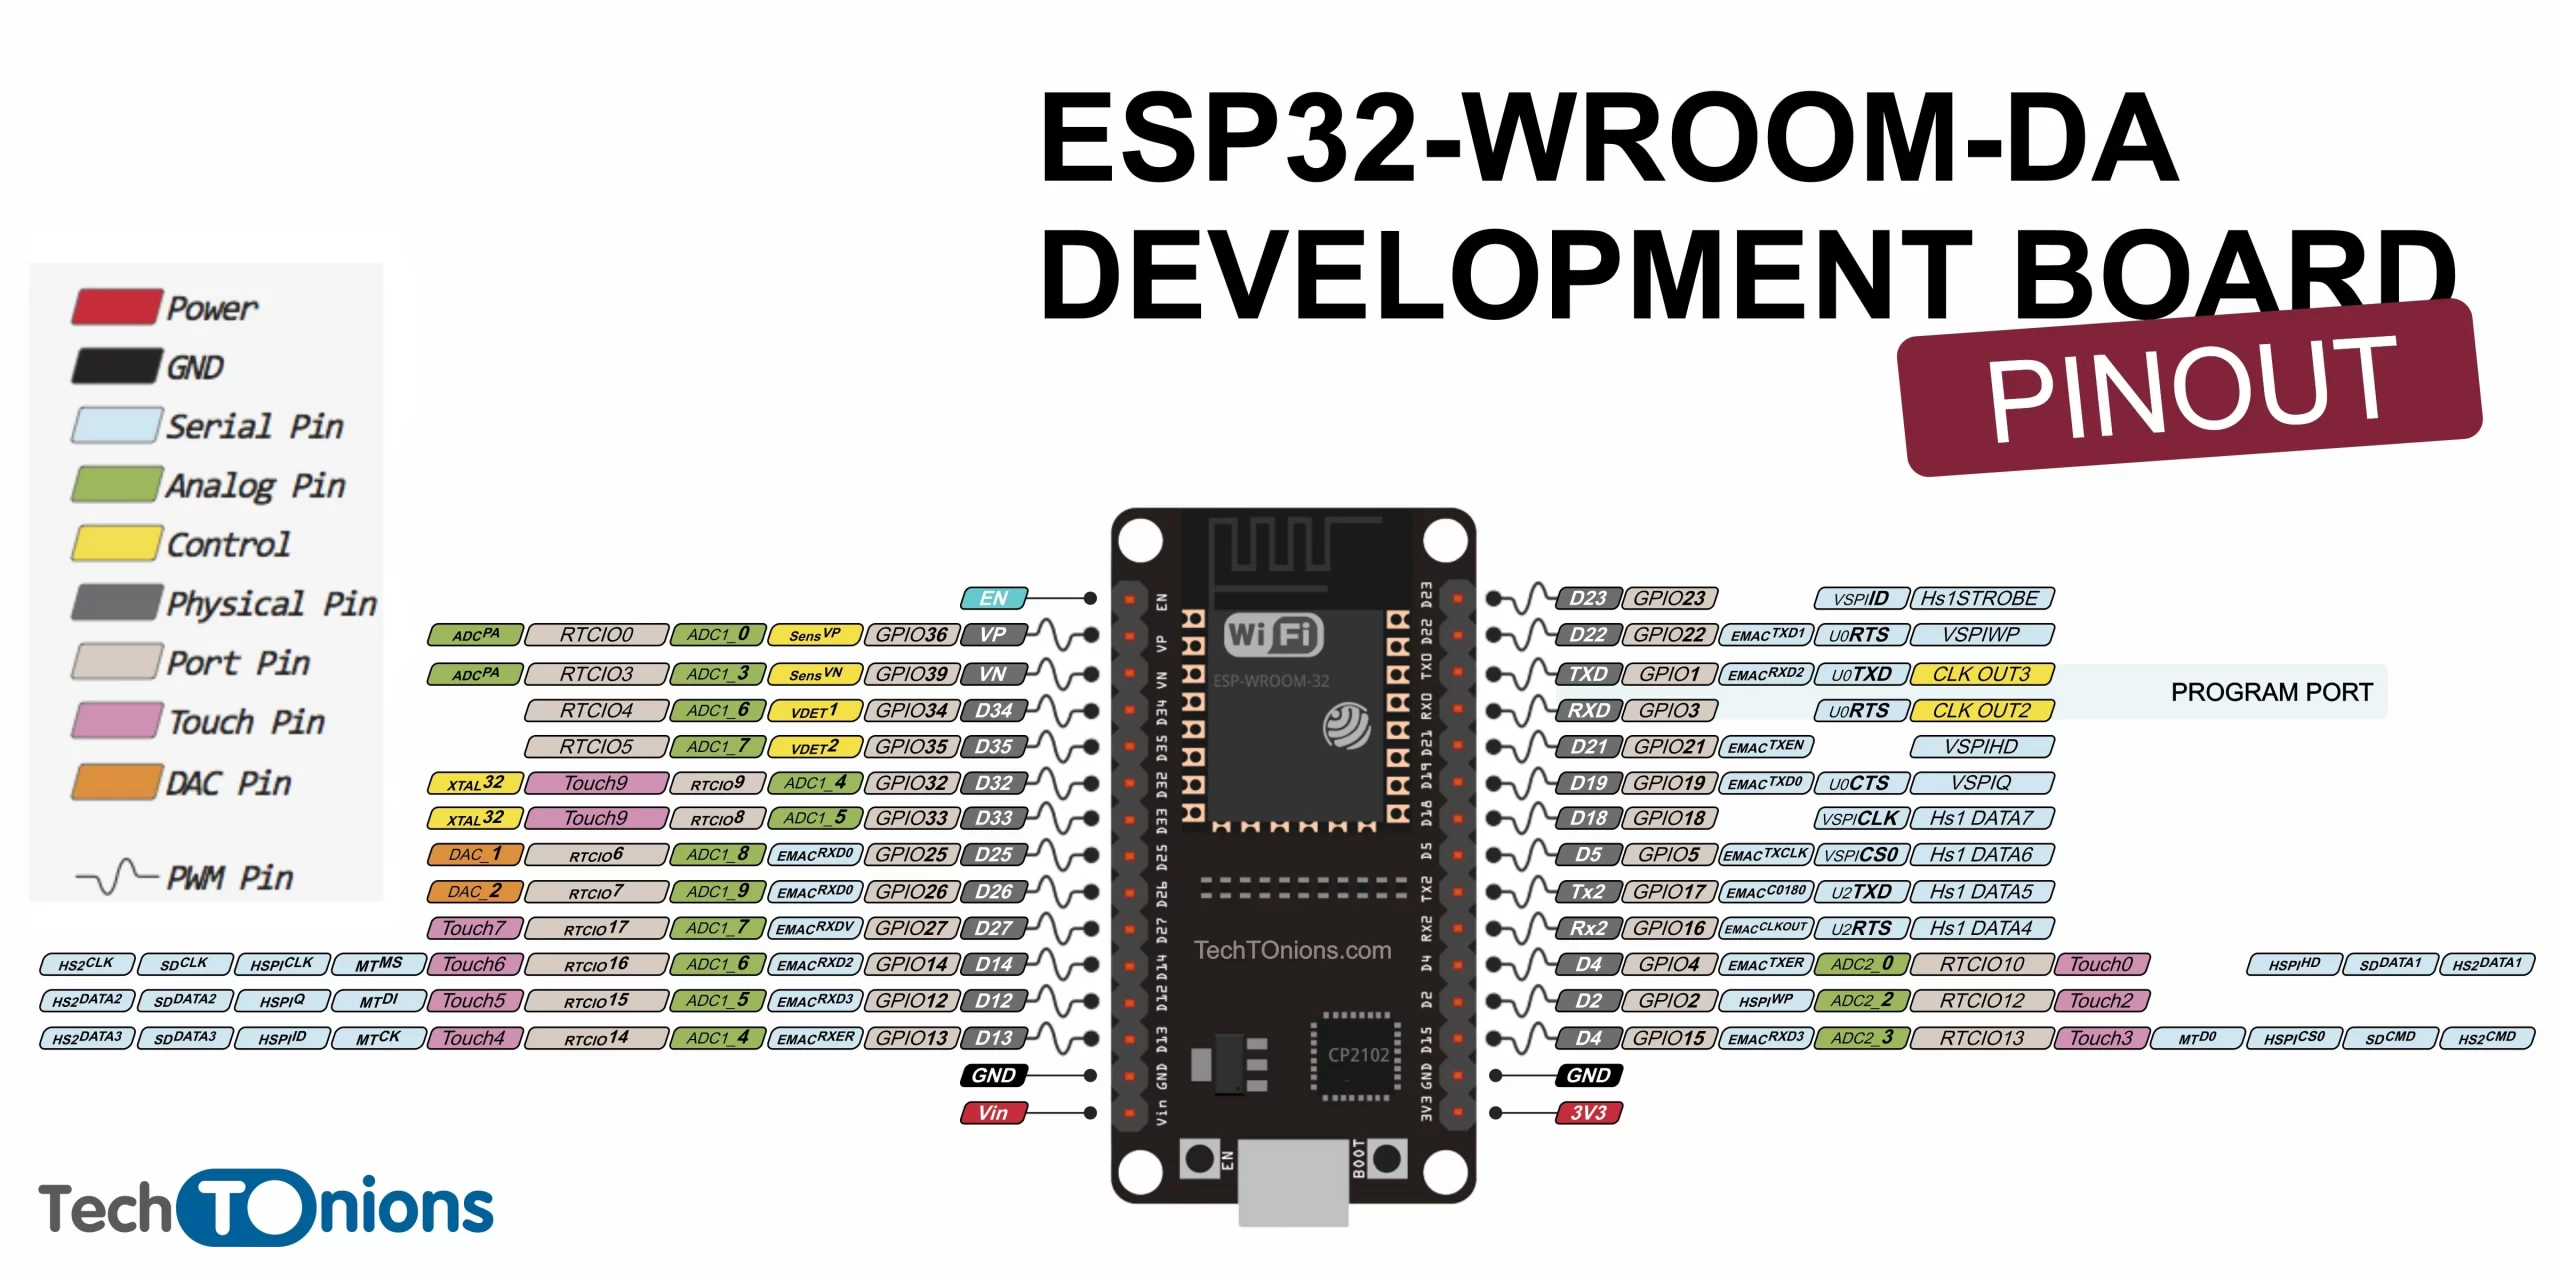 Brim party Duty ESP32 Pinout simplified: No more confusion when choosing GPIOs.